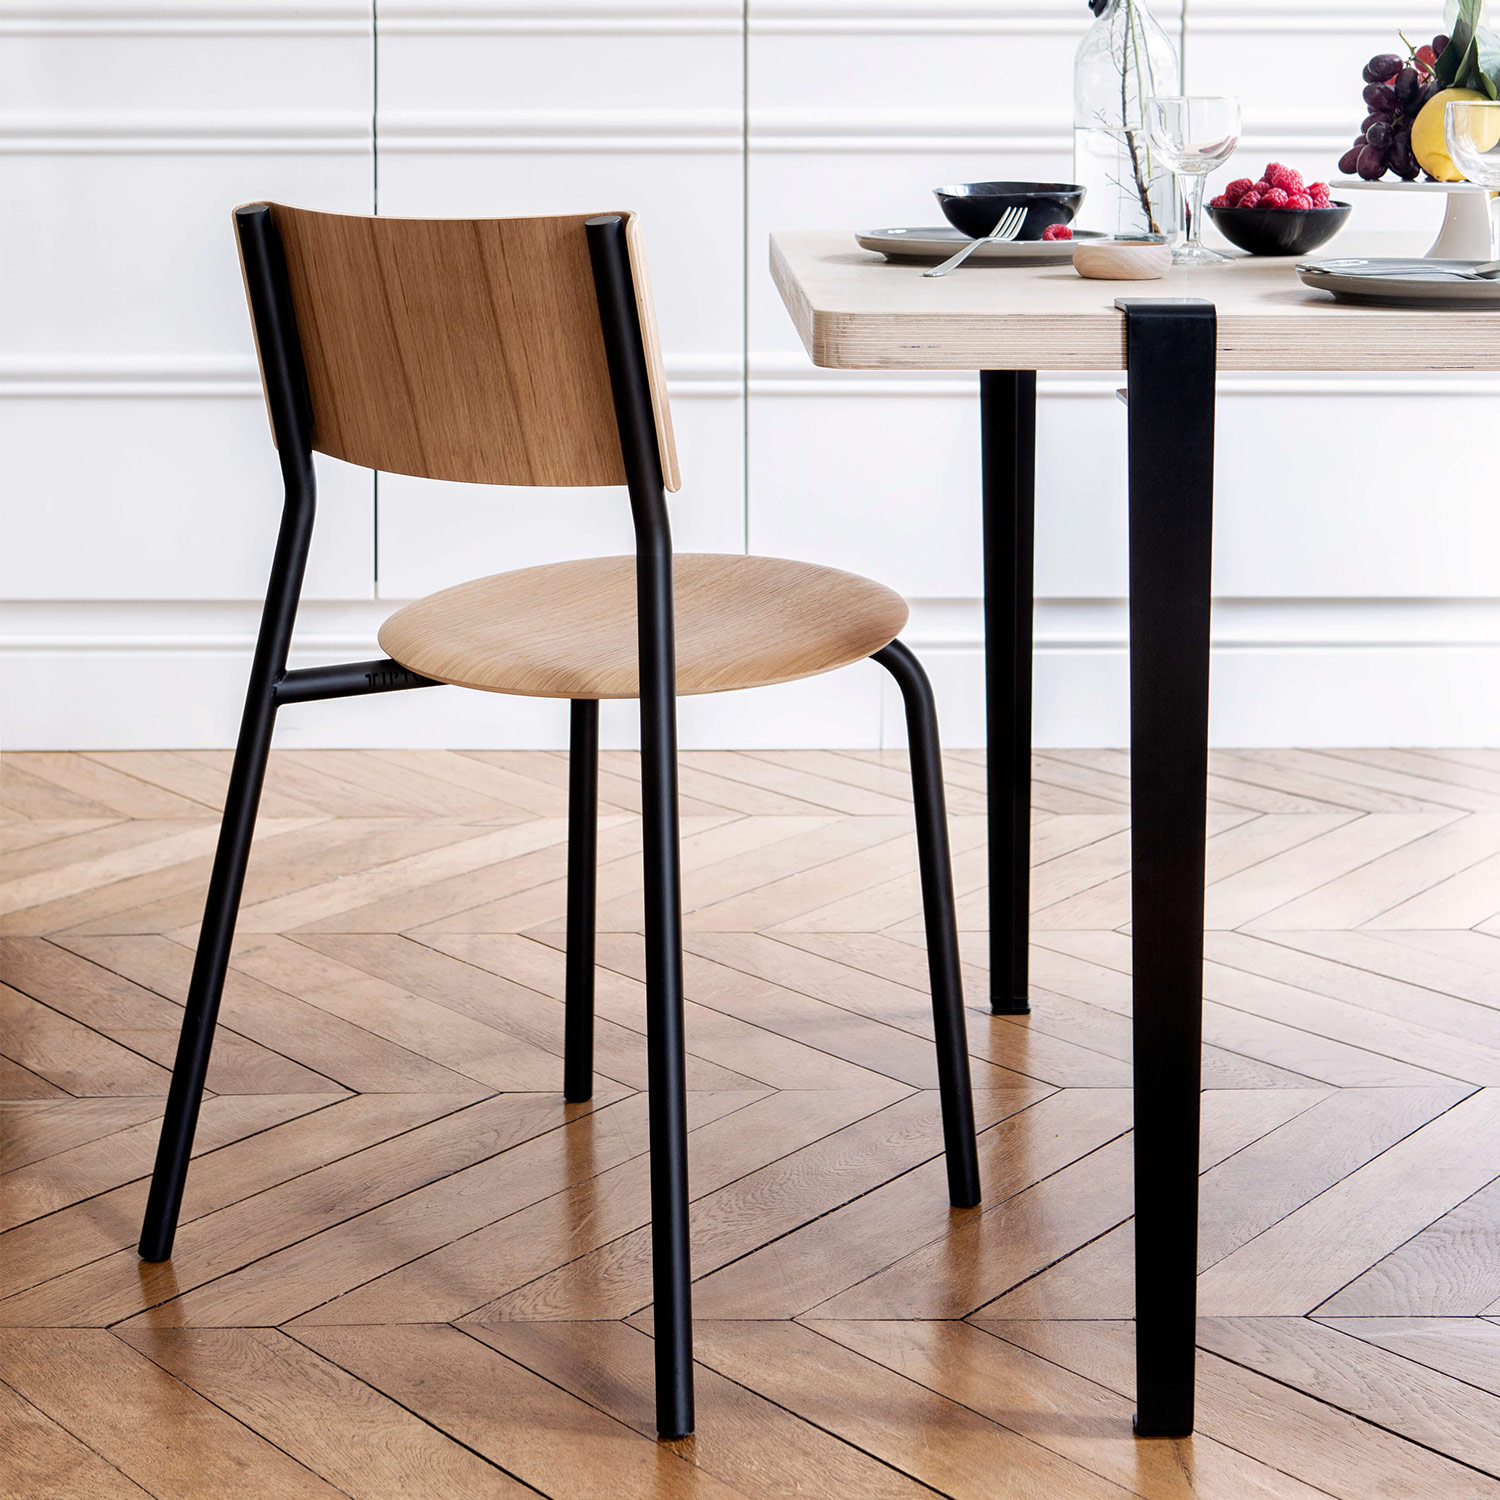 Table and desk leg – 75 cm